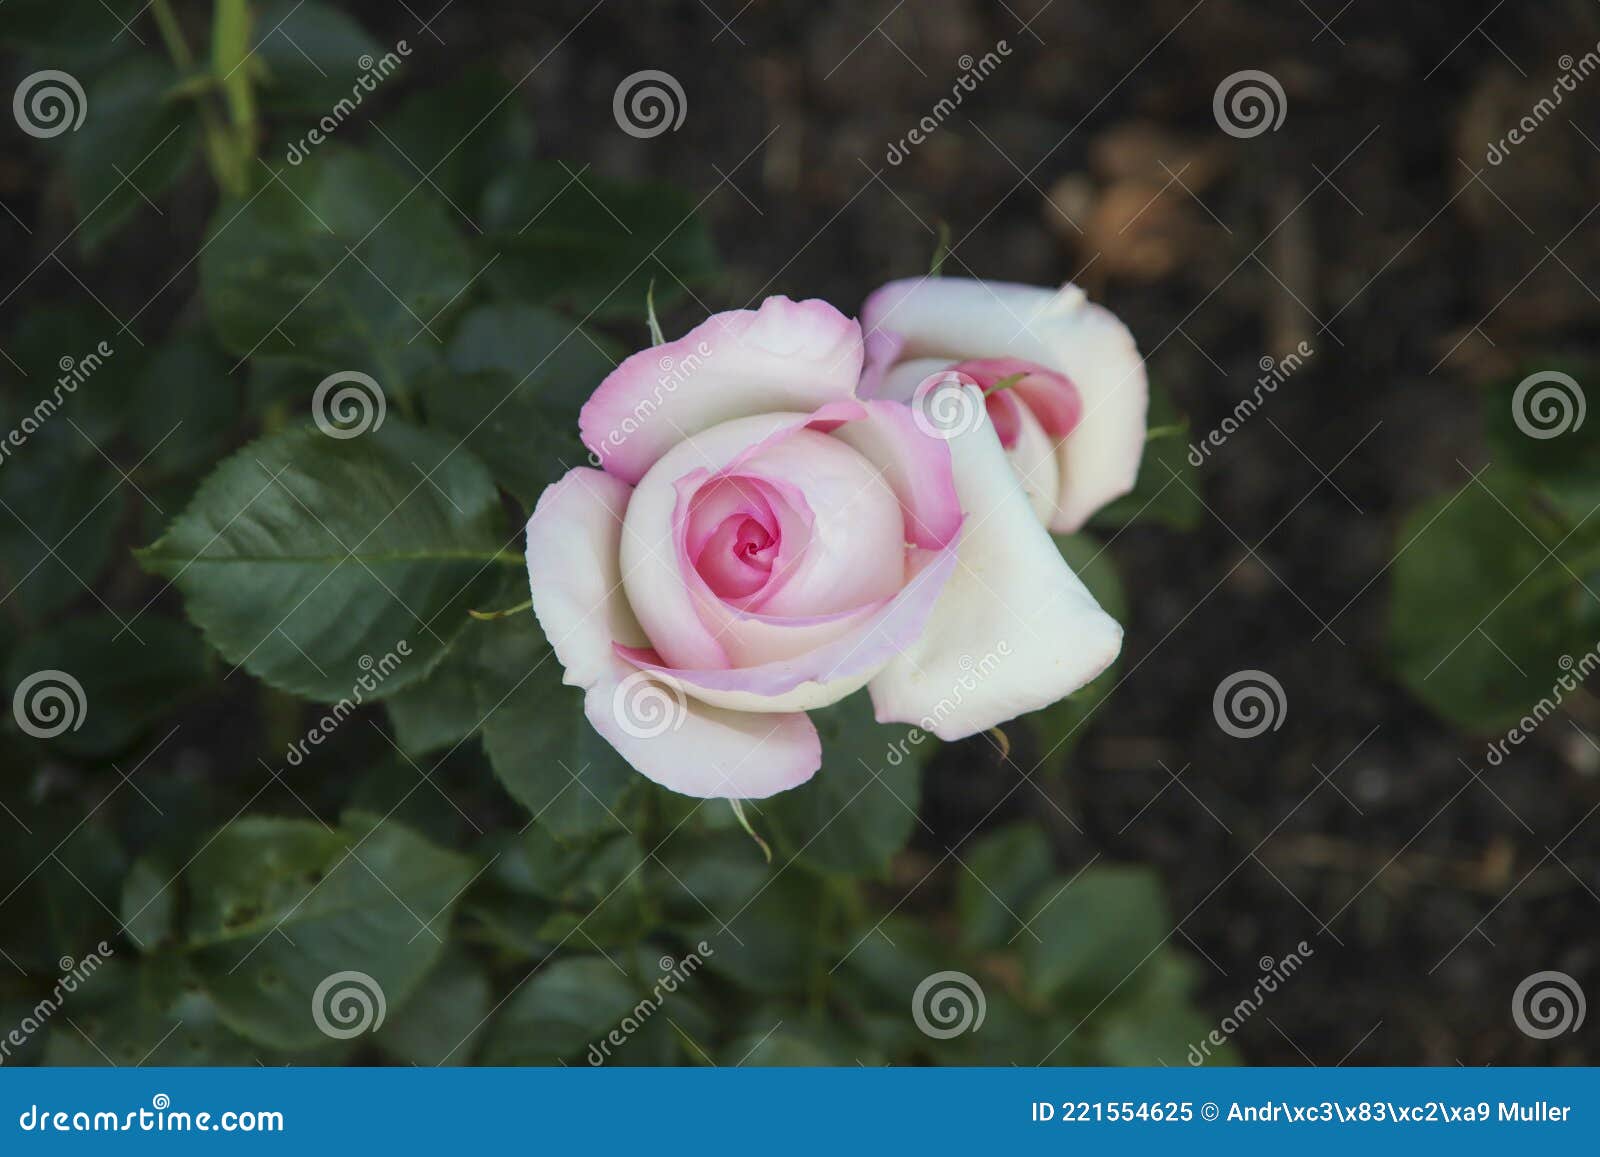 rose garden guldemondplantsoen in boskoop with rose variety ragazza